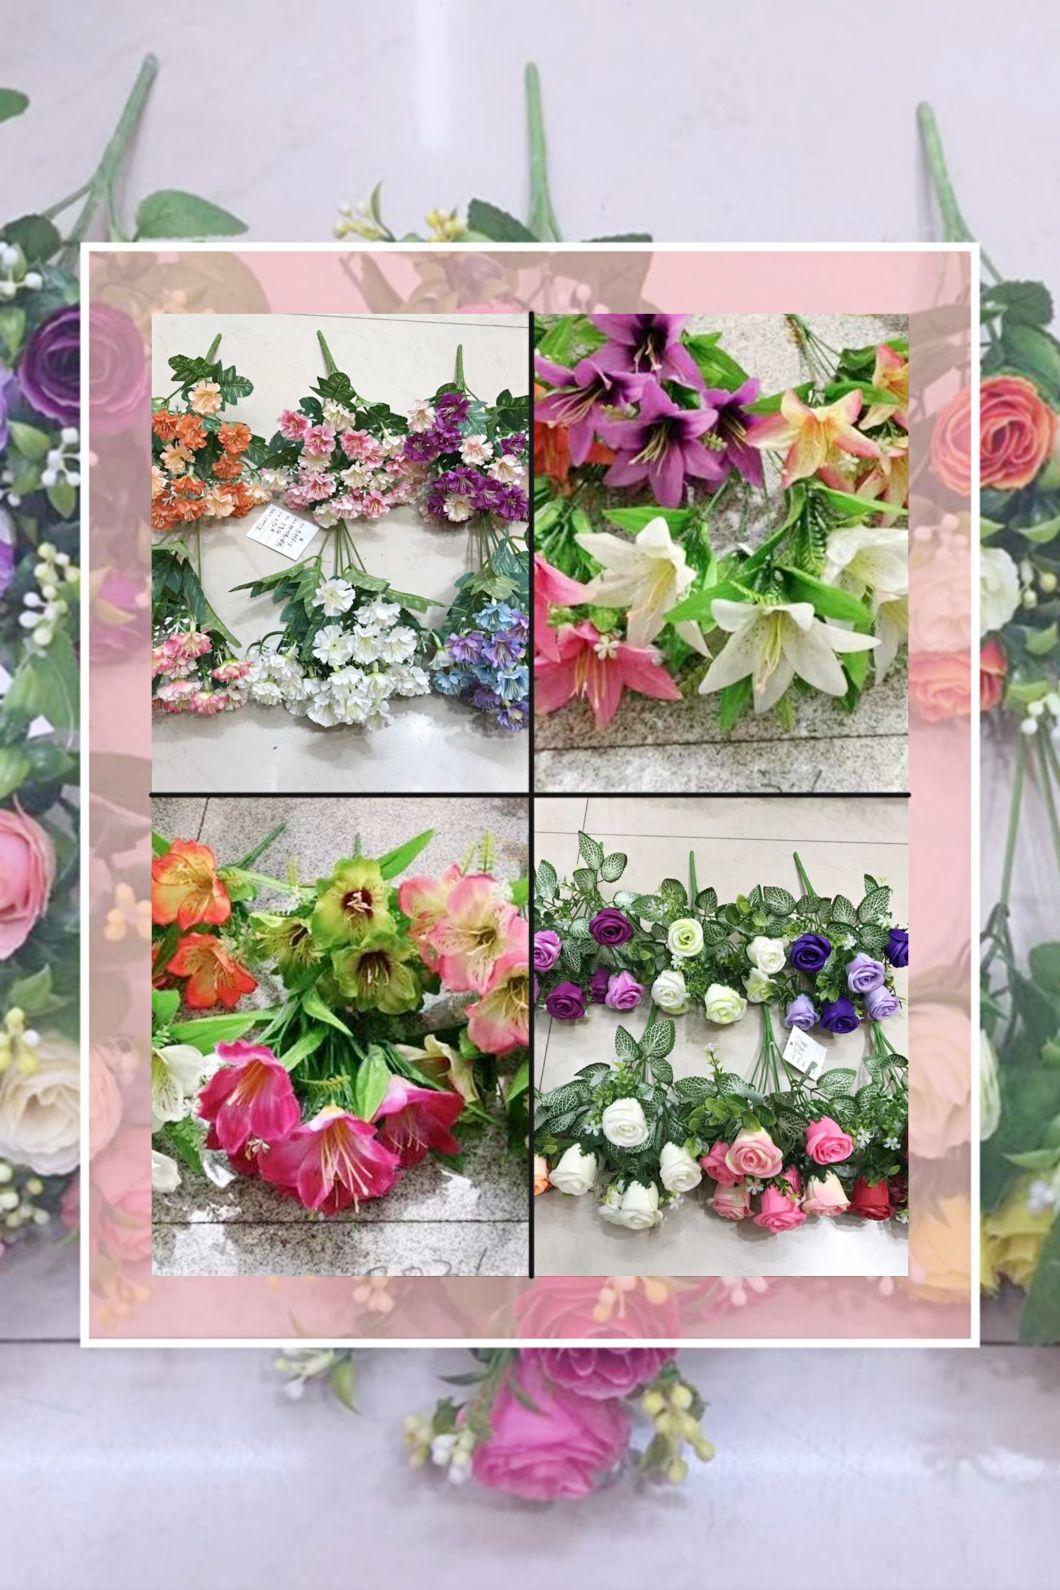 Silk Rose Flower Stem Wedding Decorative Artificial Rose Flower for Sale